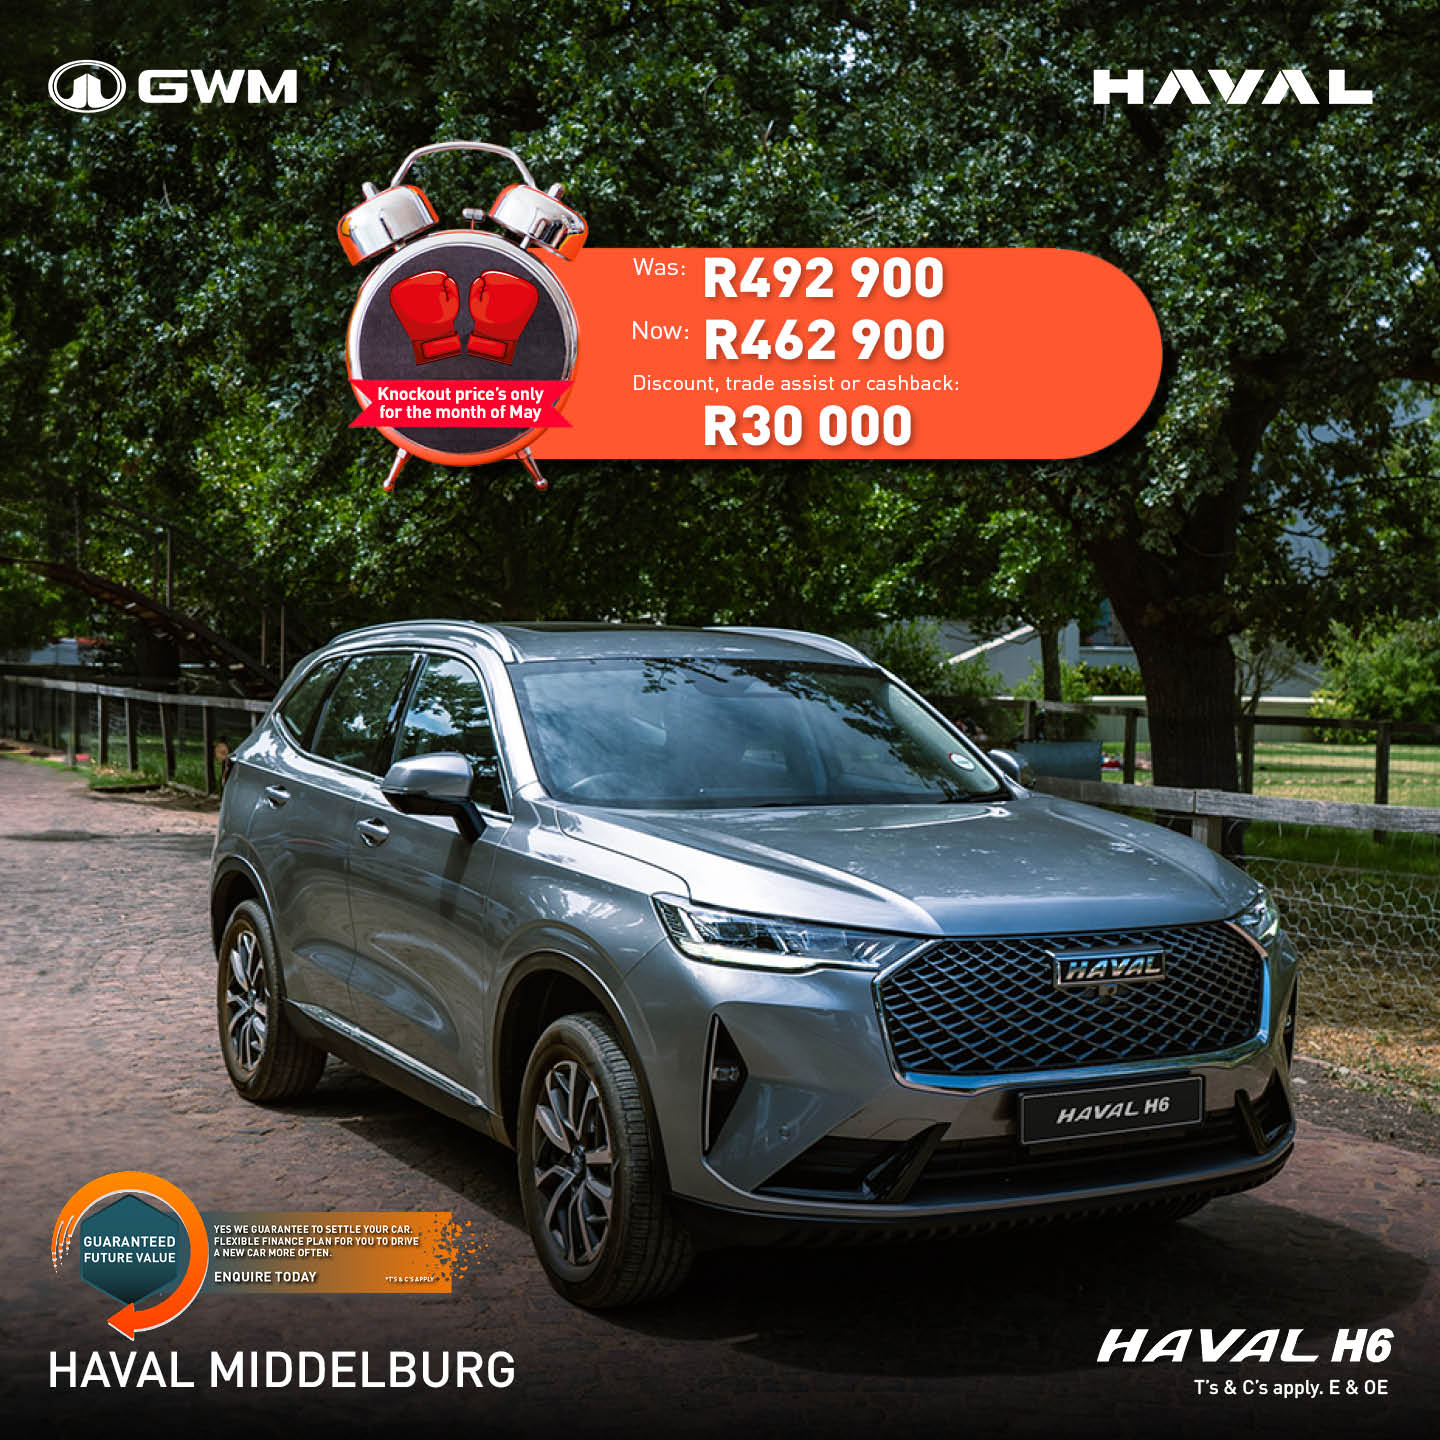 Haval H6 image from Eastvaal Motors